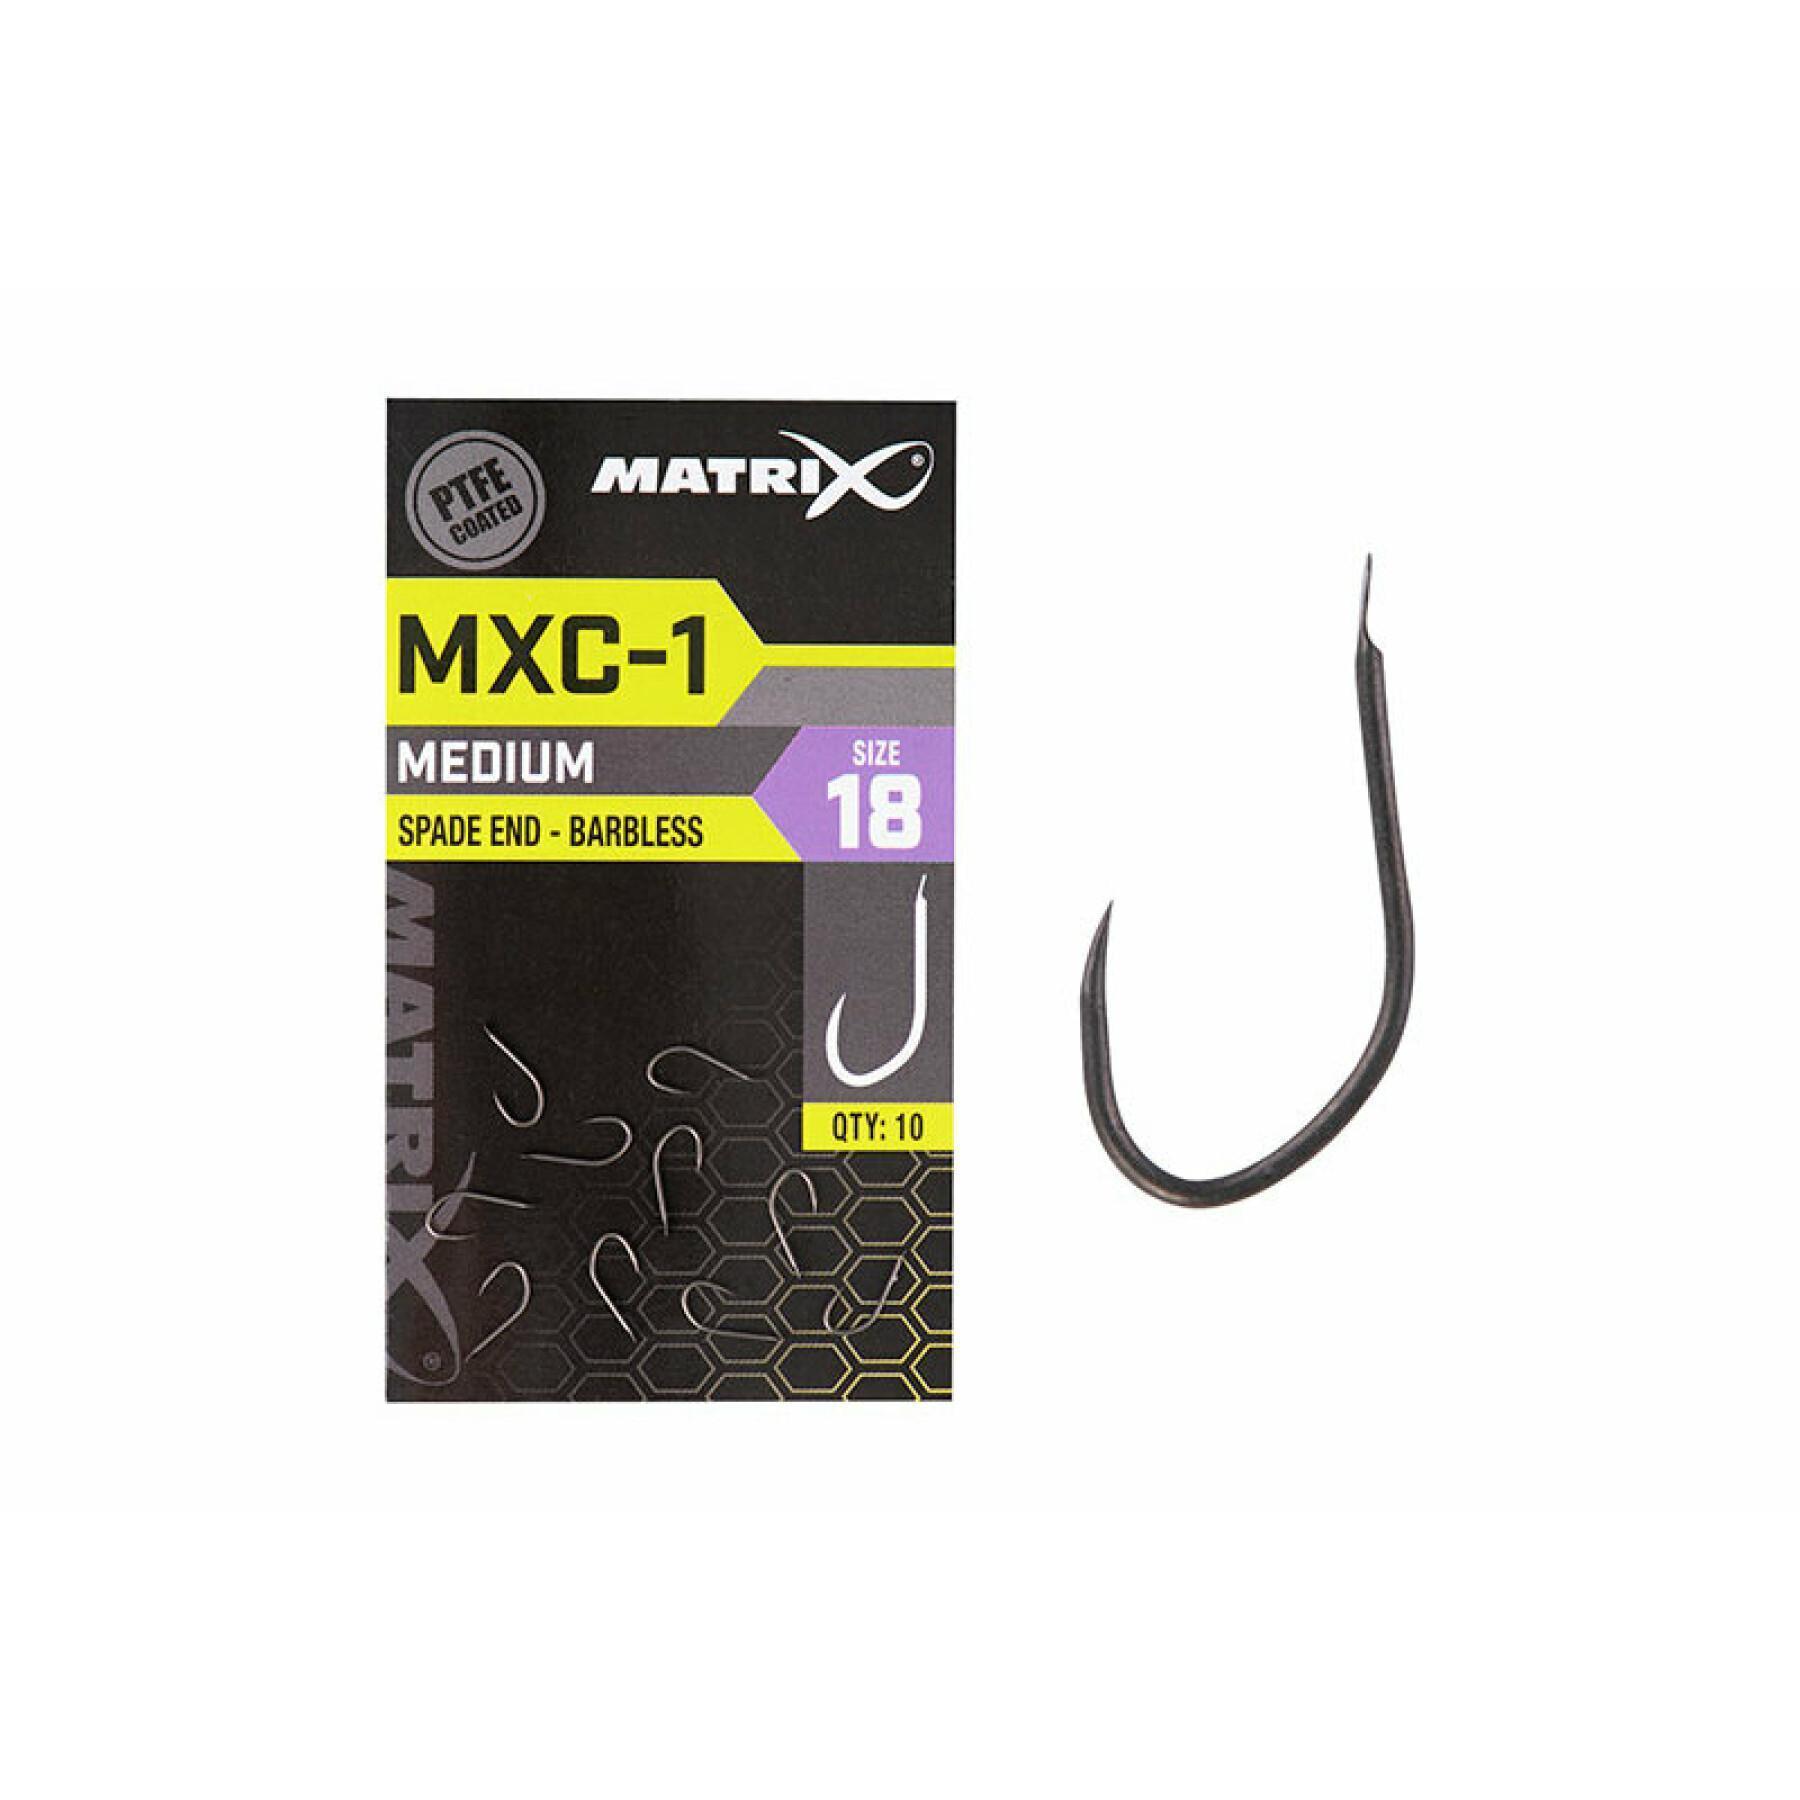 Ami senza ardiglione Matrix MXC-1 Spade End (PTFE) x10